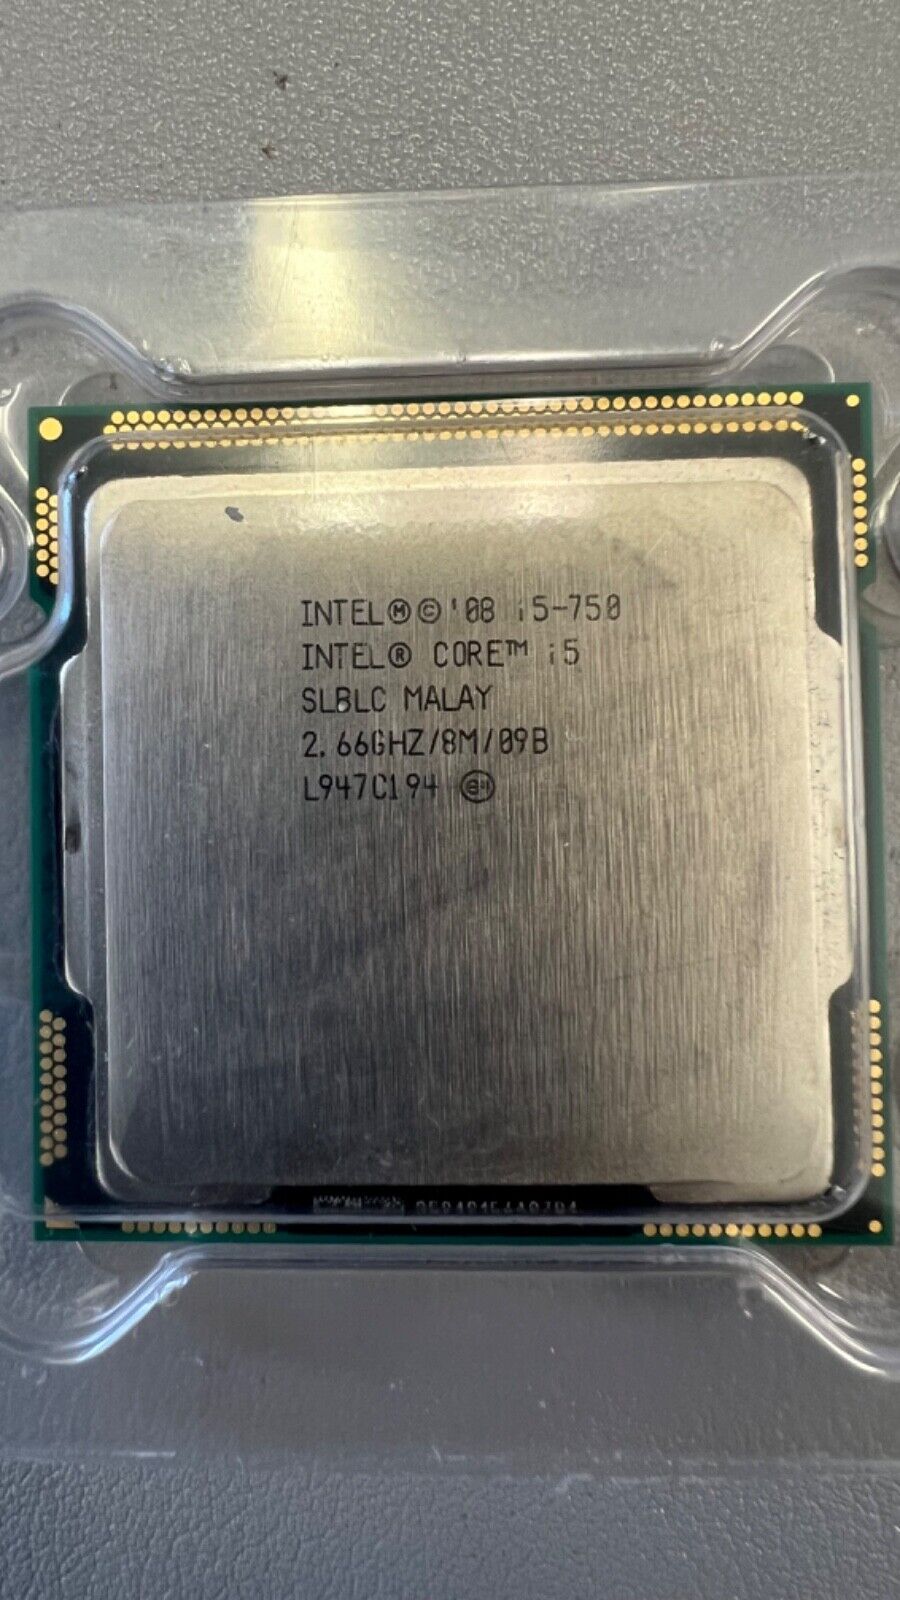 Intel Core i5 750 2.66GHz (3.20 Turbo) Quad-Core Processor [Barely Used]